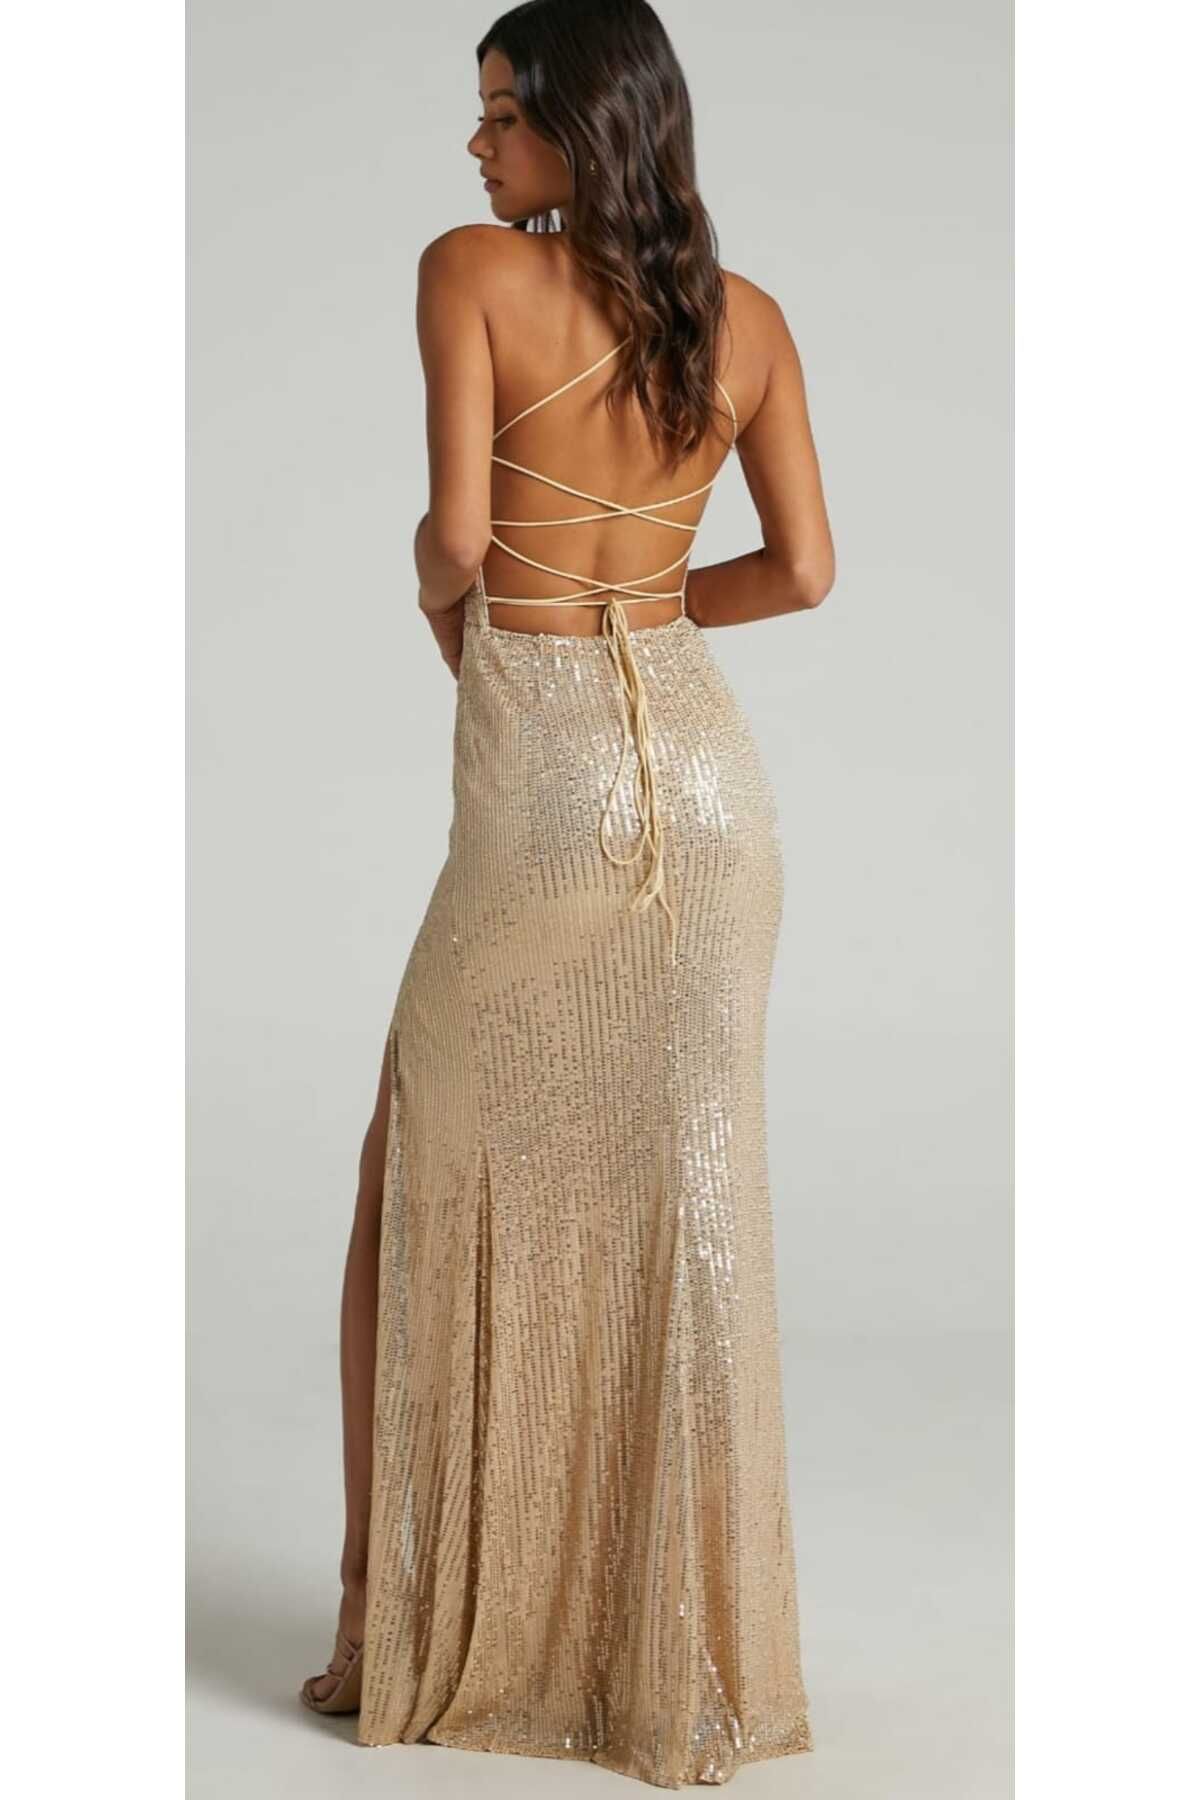 hilaltrendd Hilaltrend Zara Pulpayet Işlemeli Gold Abiye Elbise